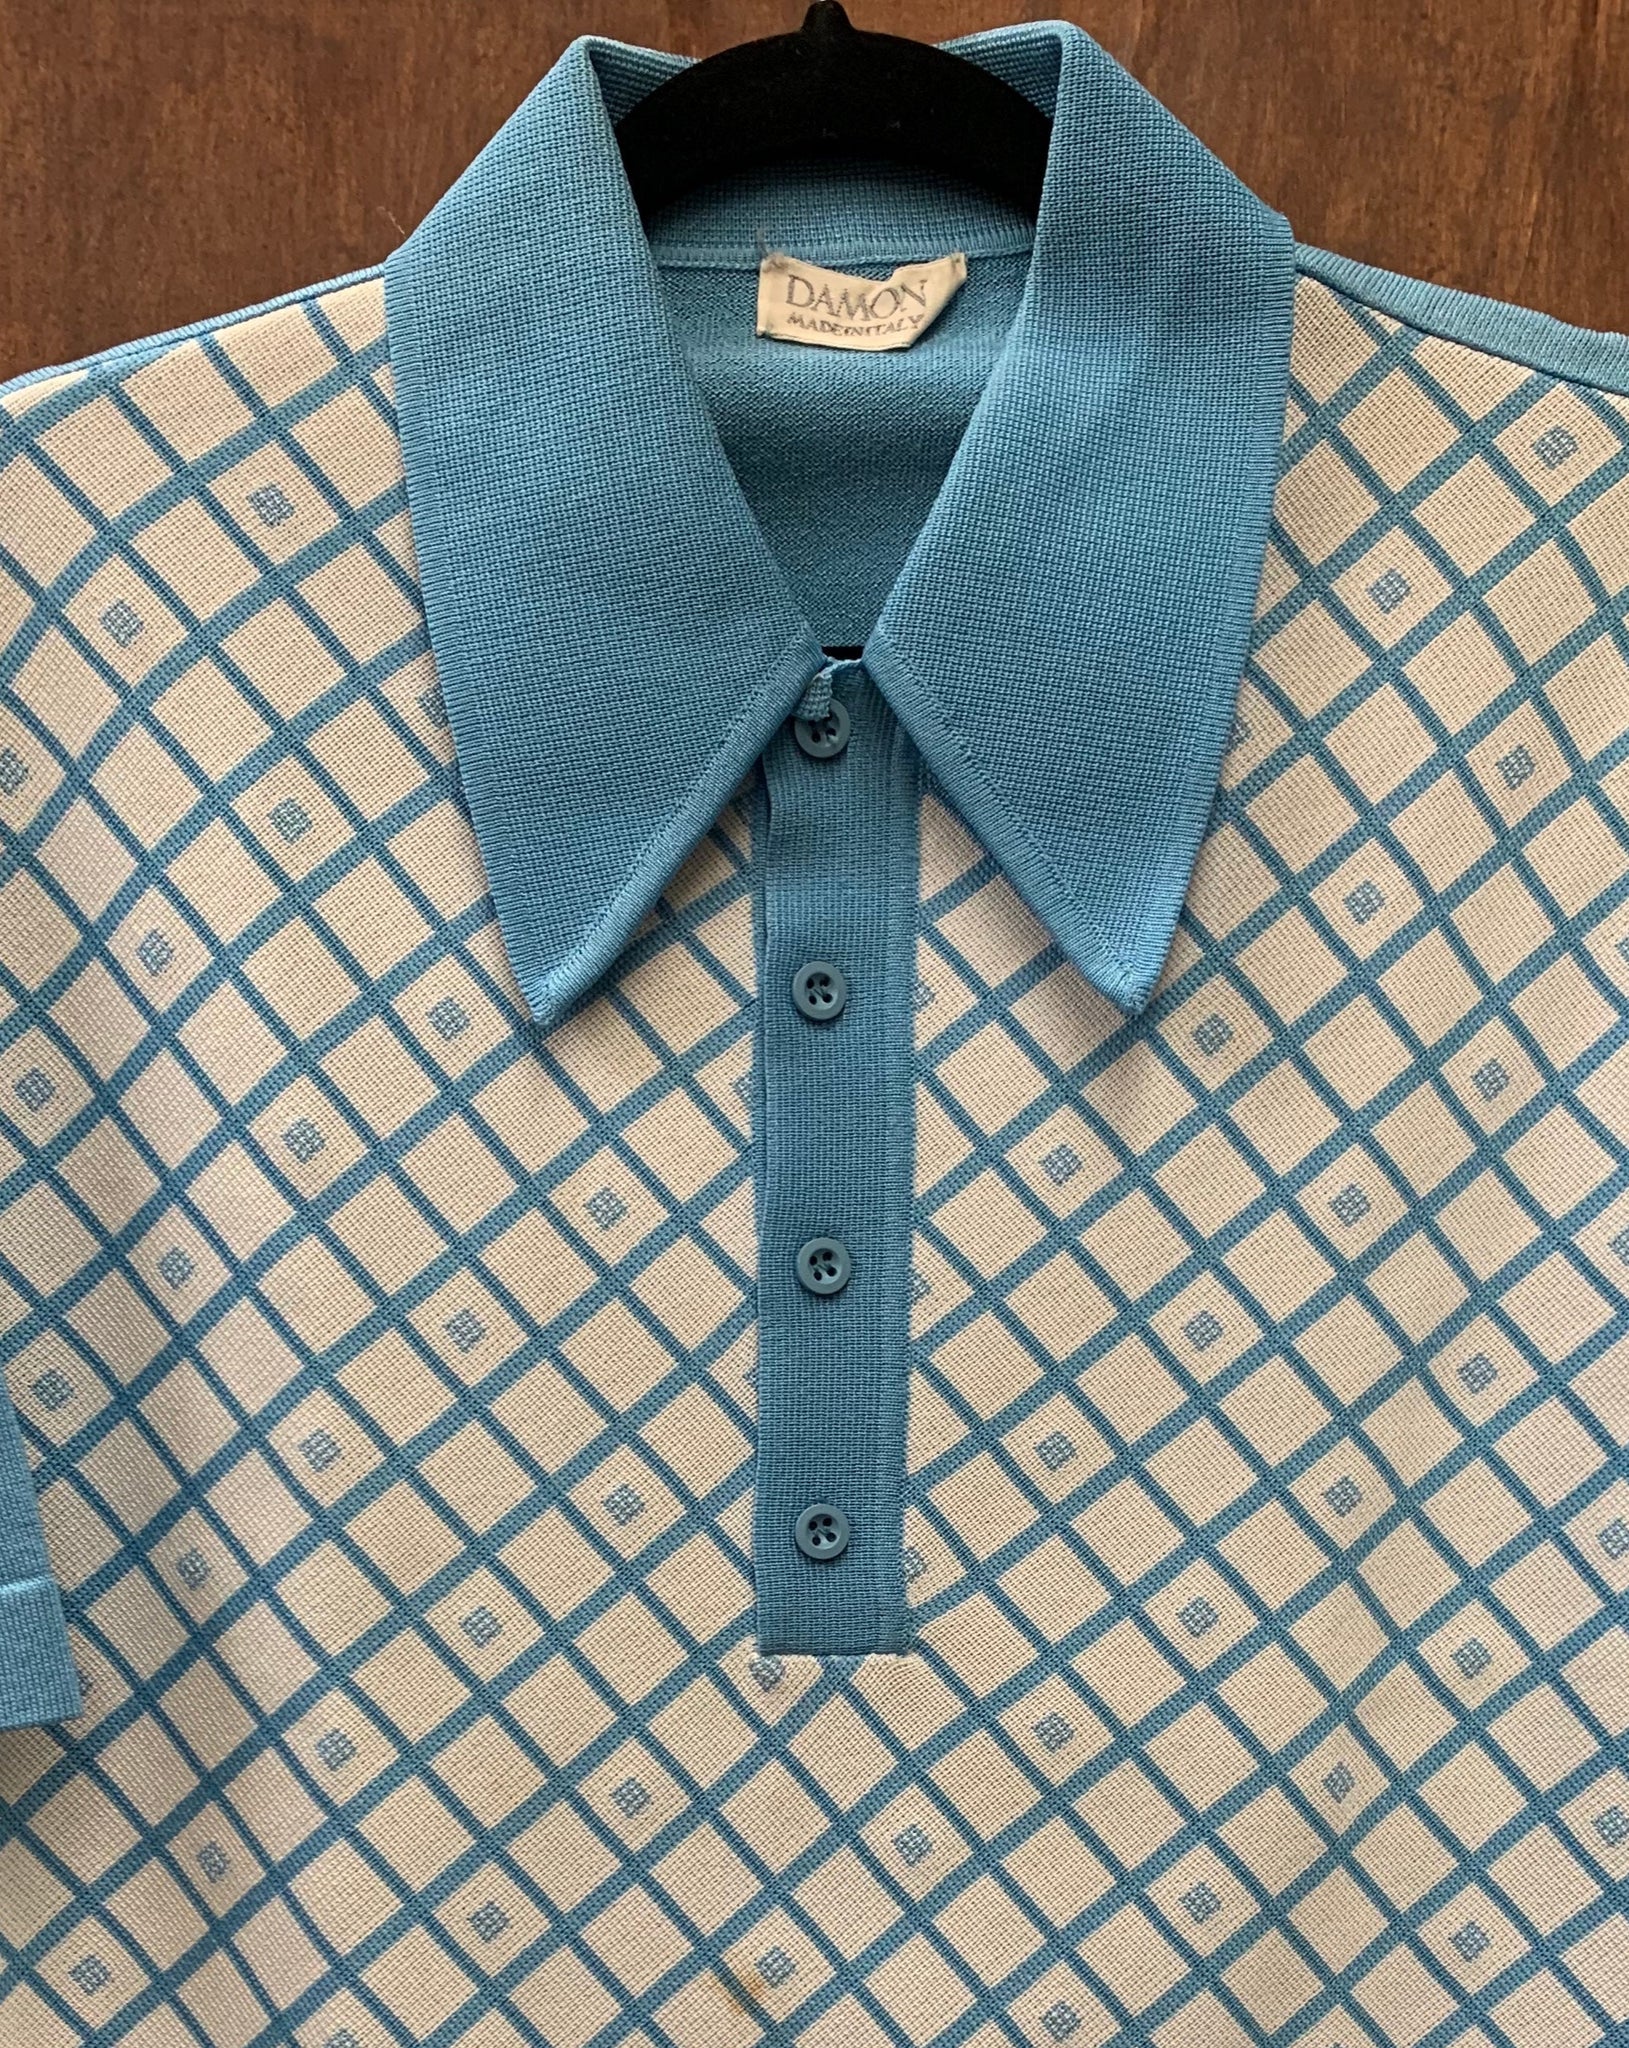 1960s MENS TOP- Damon blue check dagger collar knit